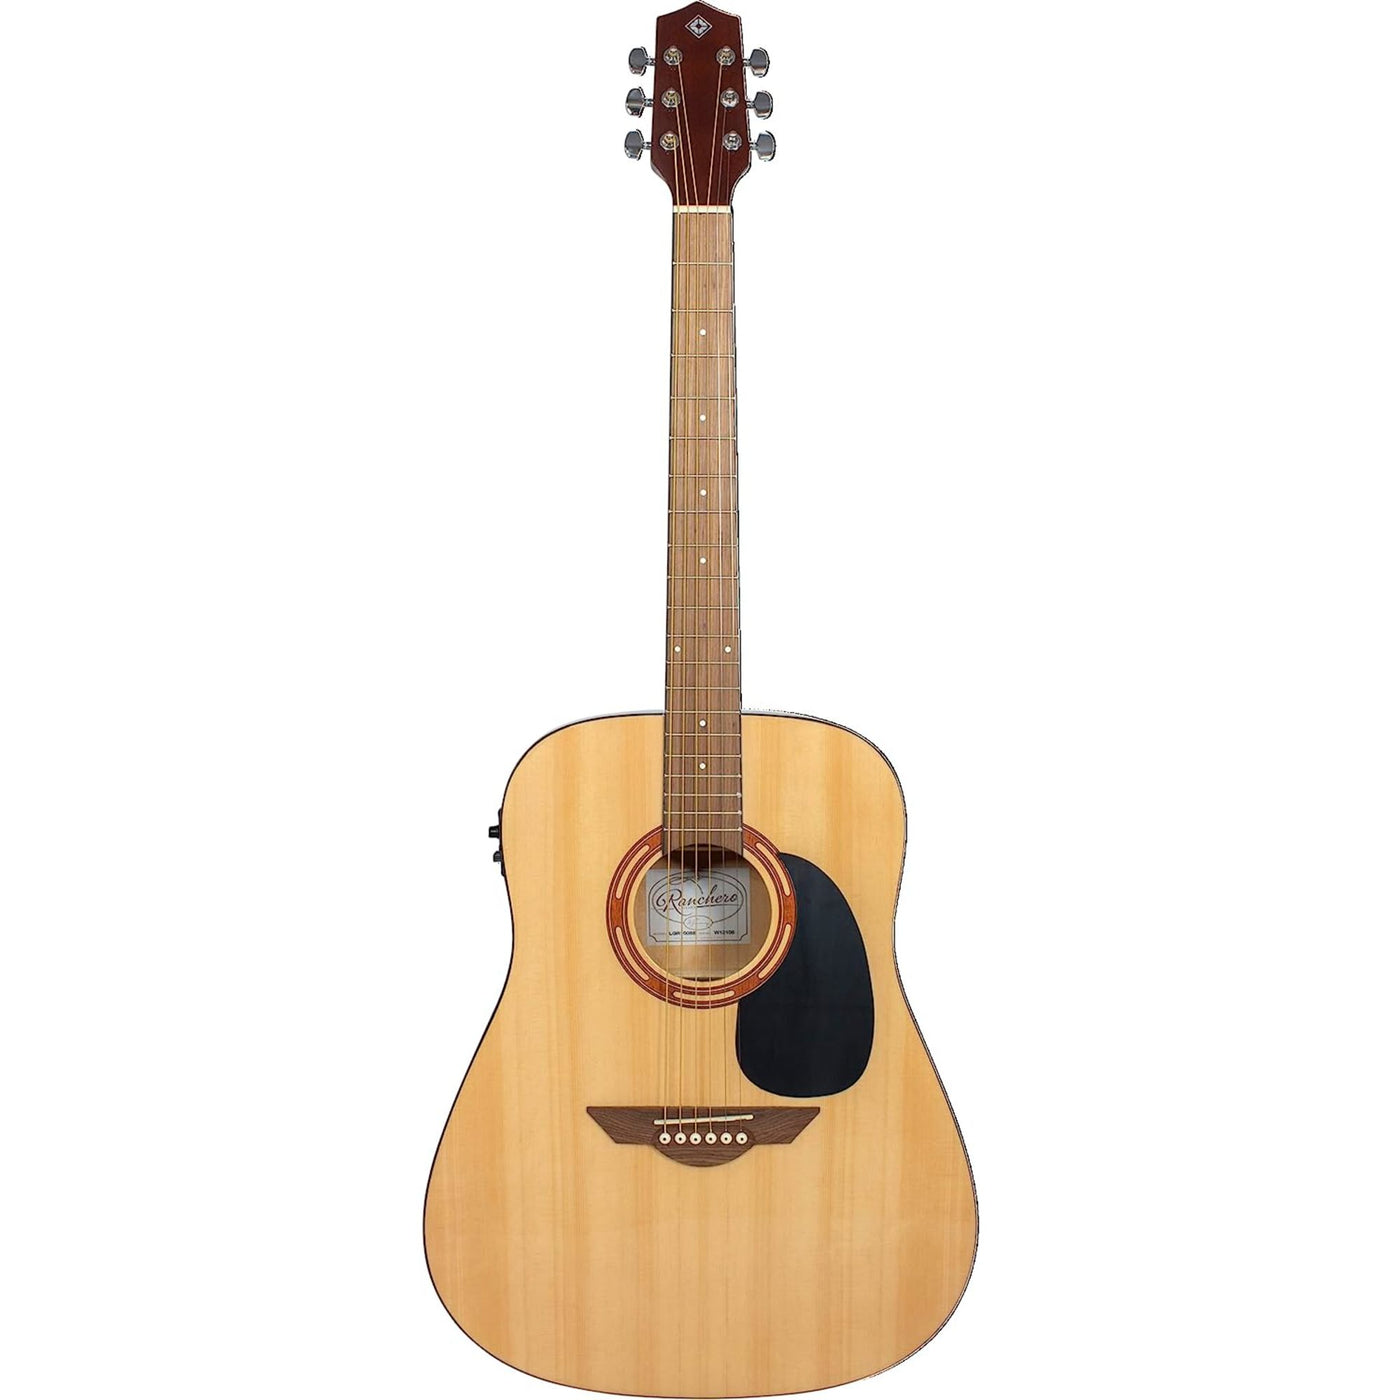 H. Jimenez LGR100SE Ranchero Series Full Size Steel String Guitar with Pick up